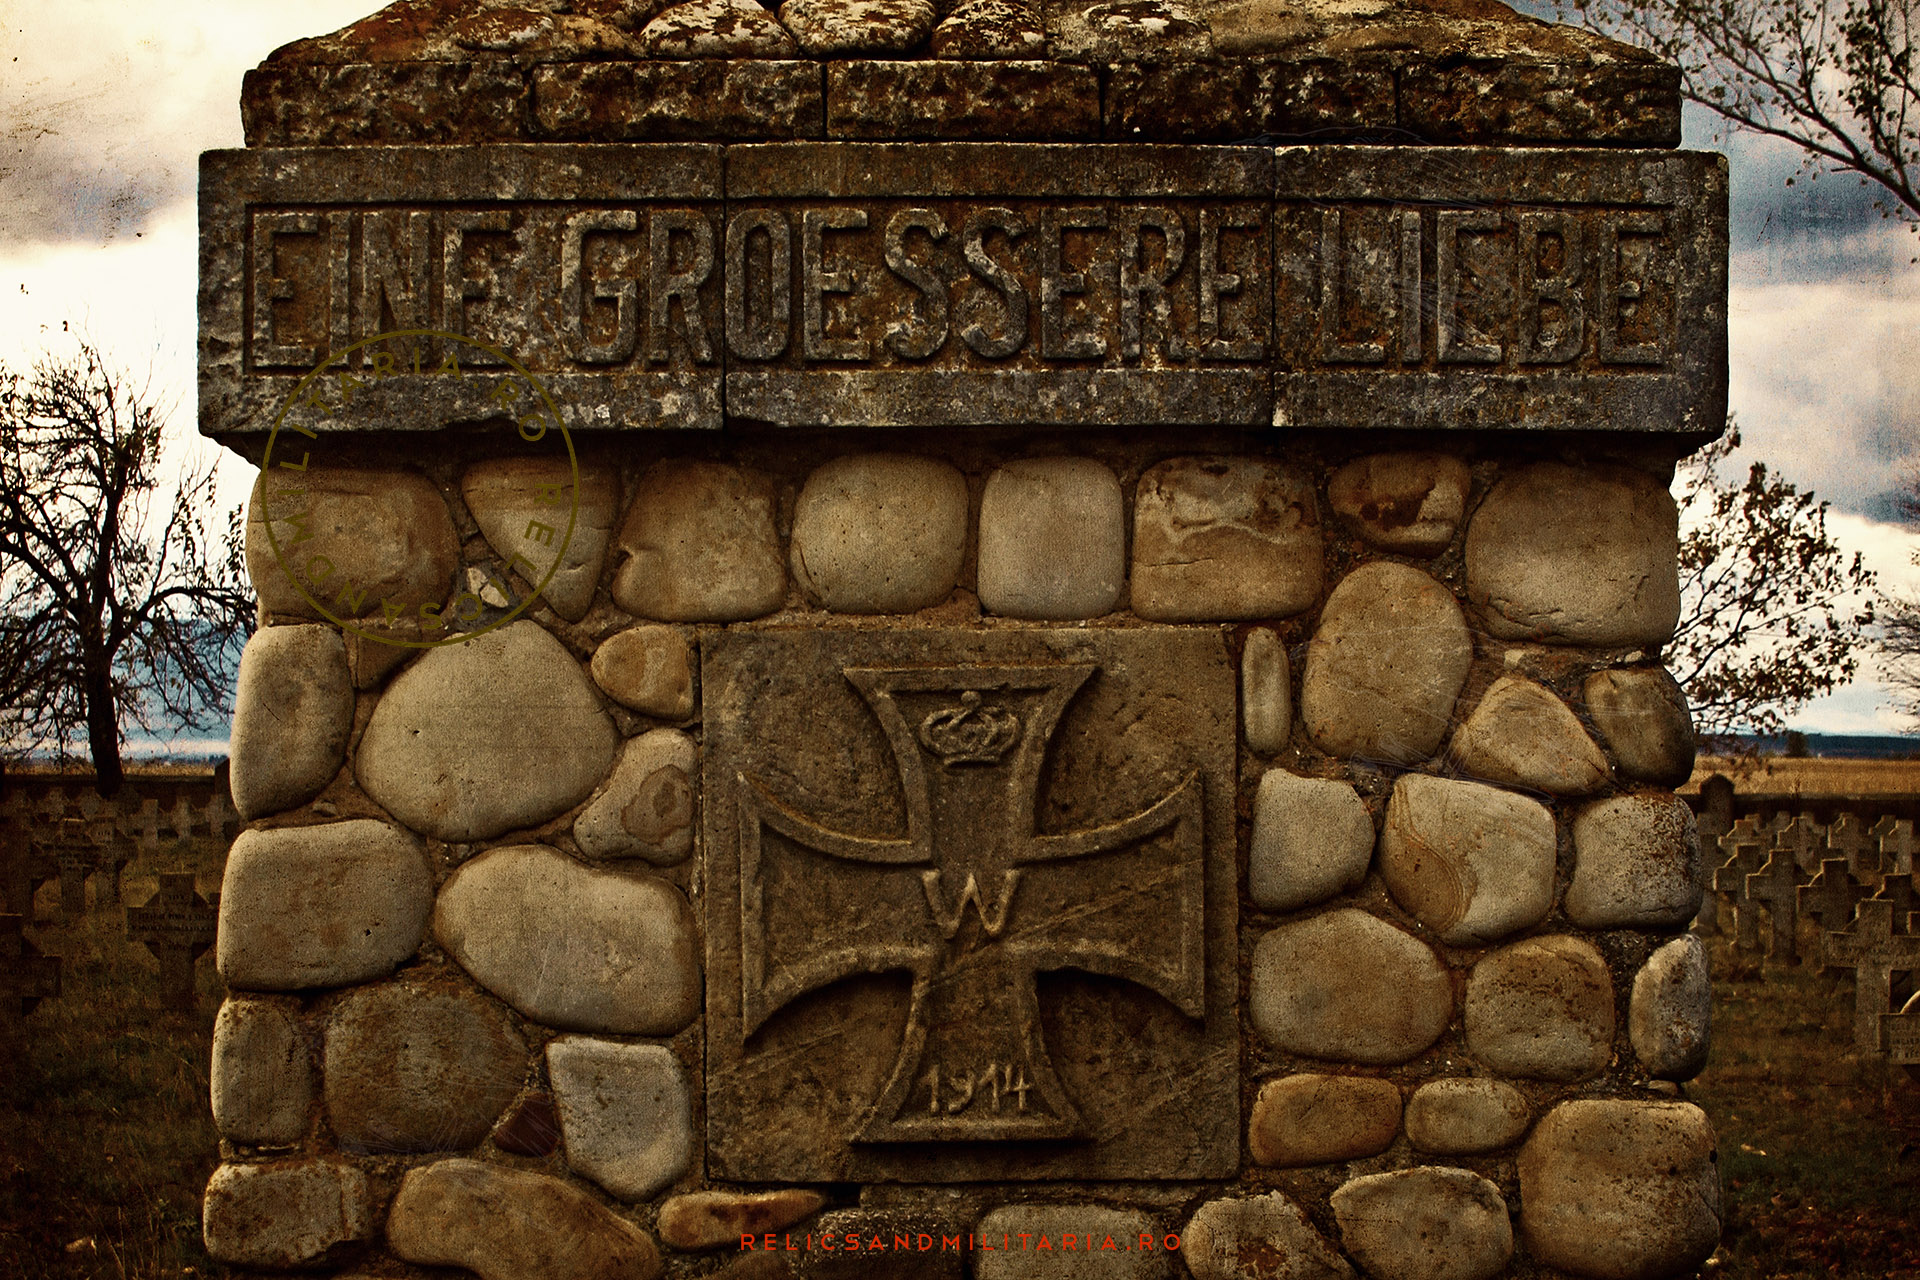  German World War One cemetery in Romania